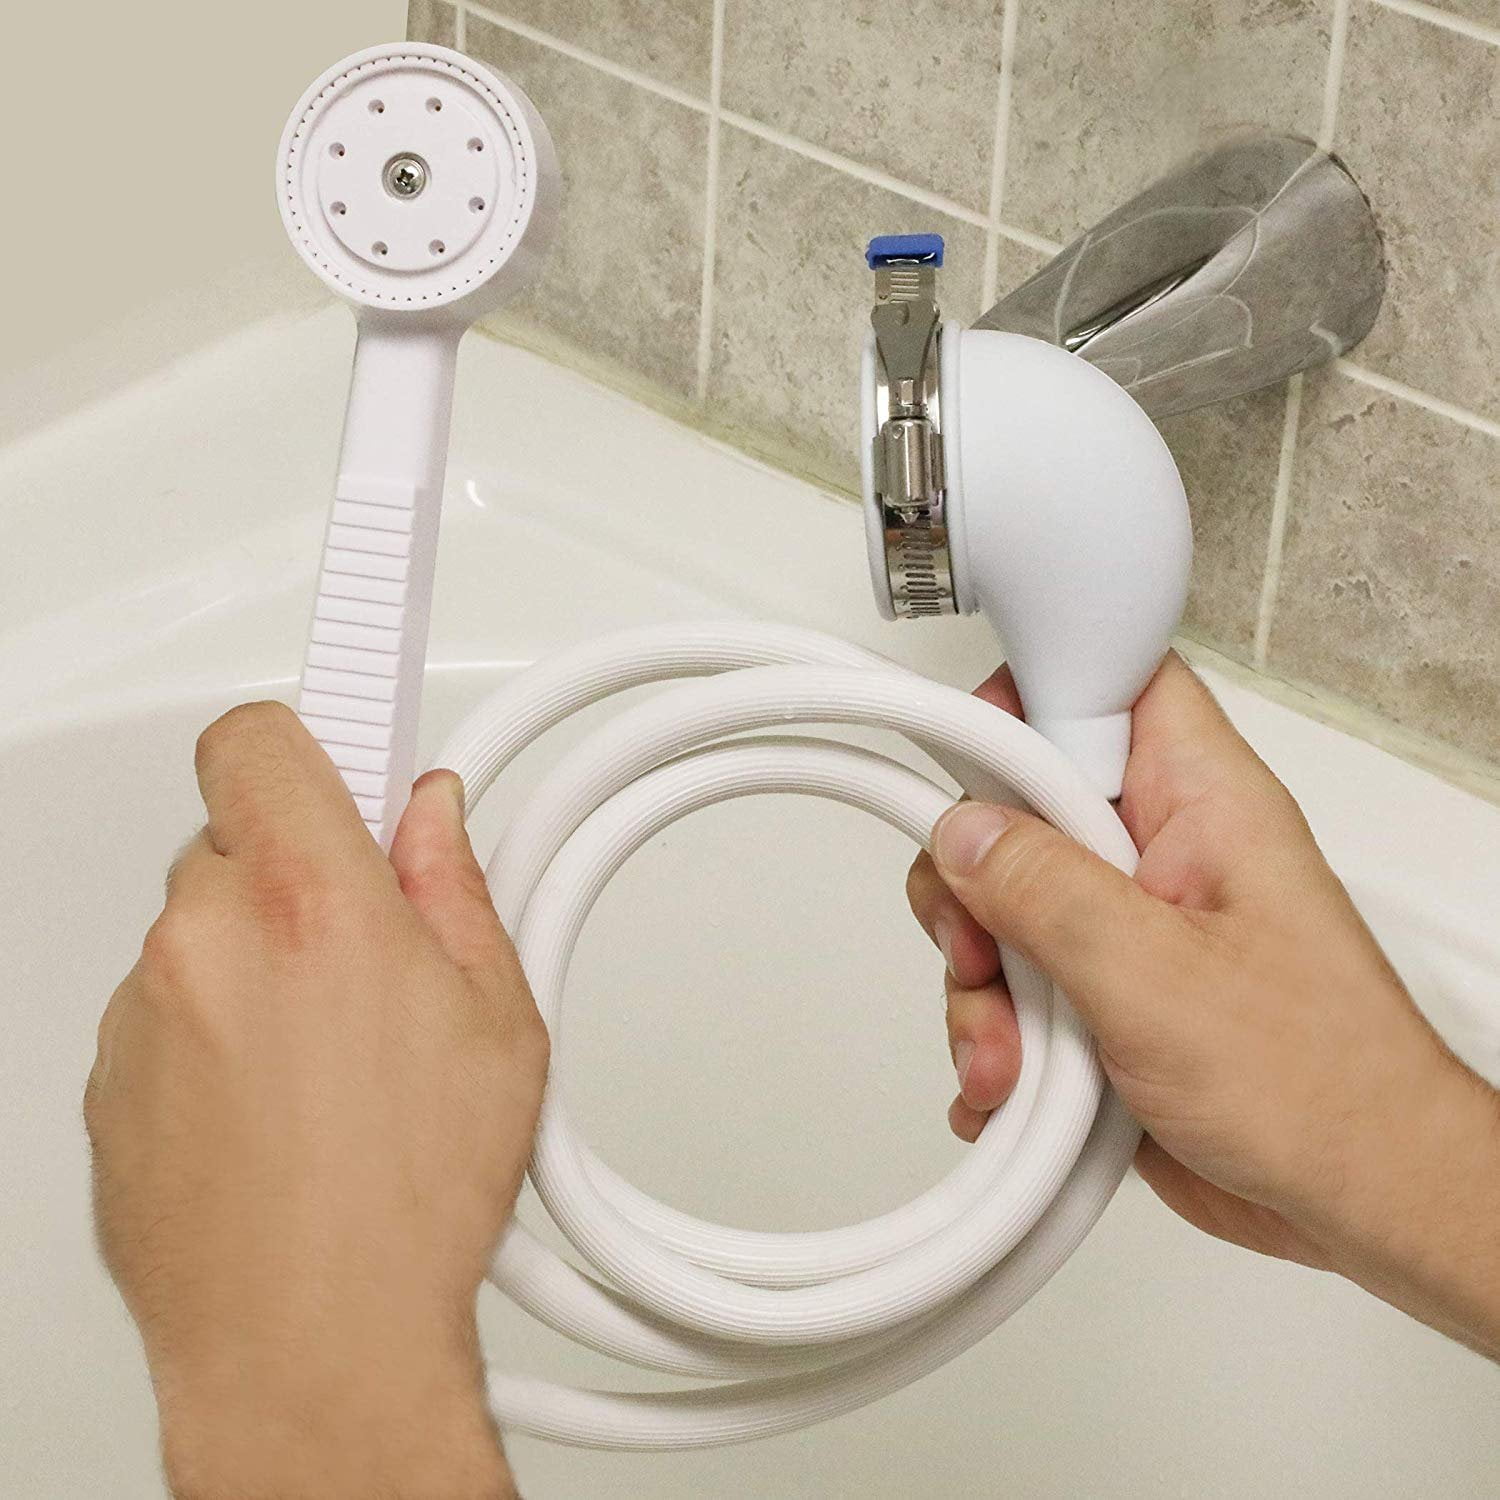 Pet Sprayer Bathtub Faucet Tub Rinser Portable Handheld Shower Head Hose 42 in 